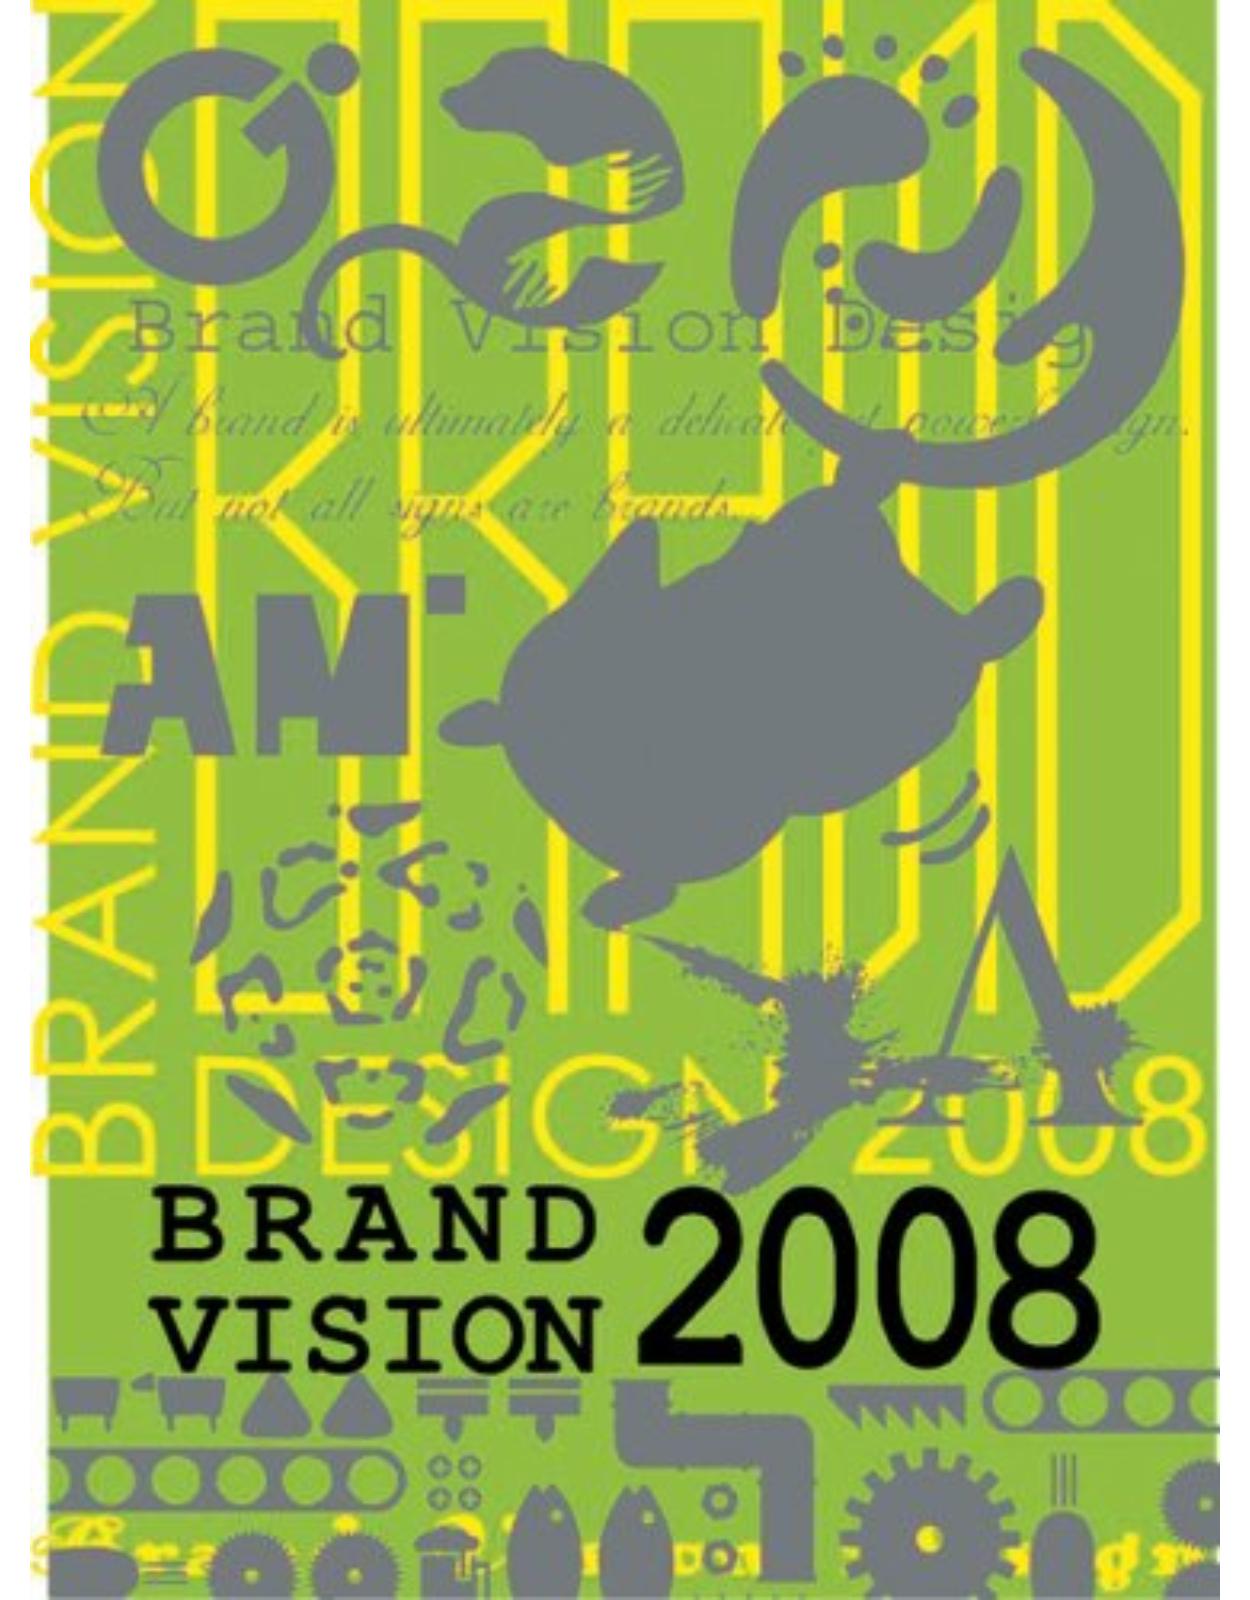 Brand Vision 2008